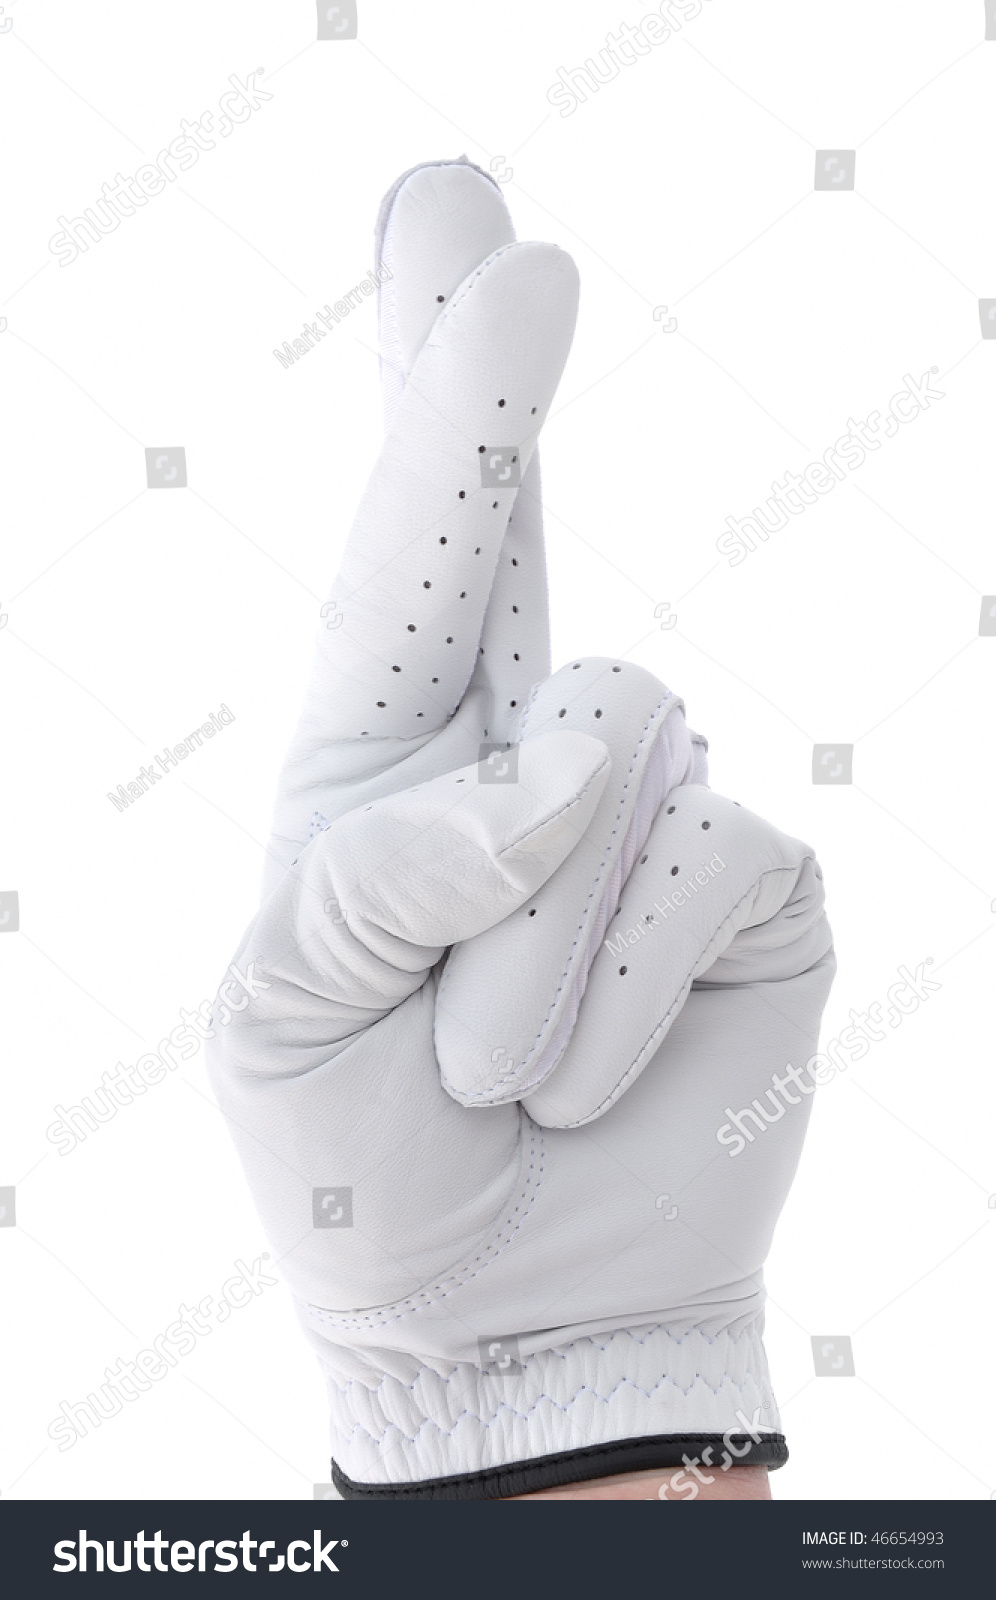 stock-photo-golfer-wearing-golf-glove-with-crossed-fingers-46654993.jpg